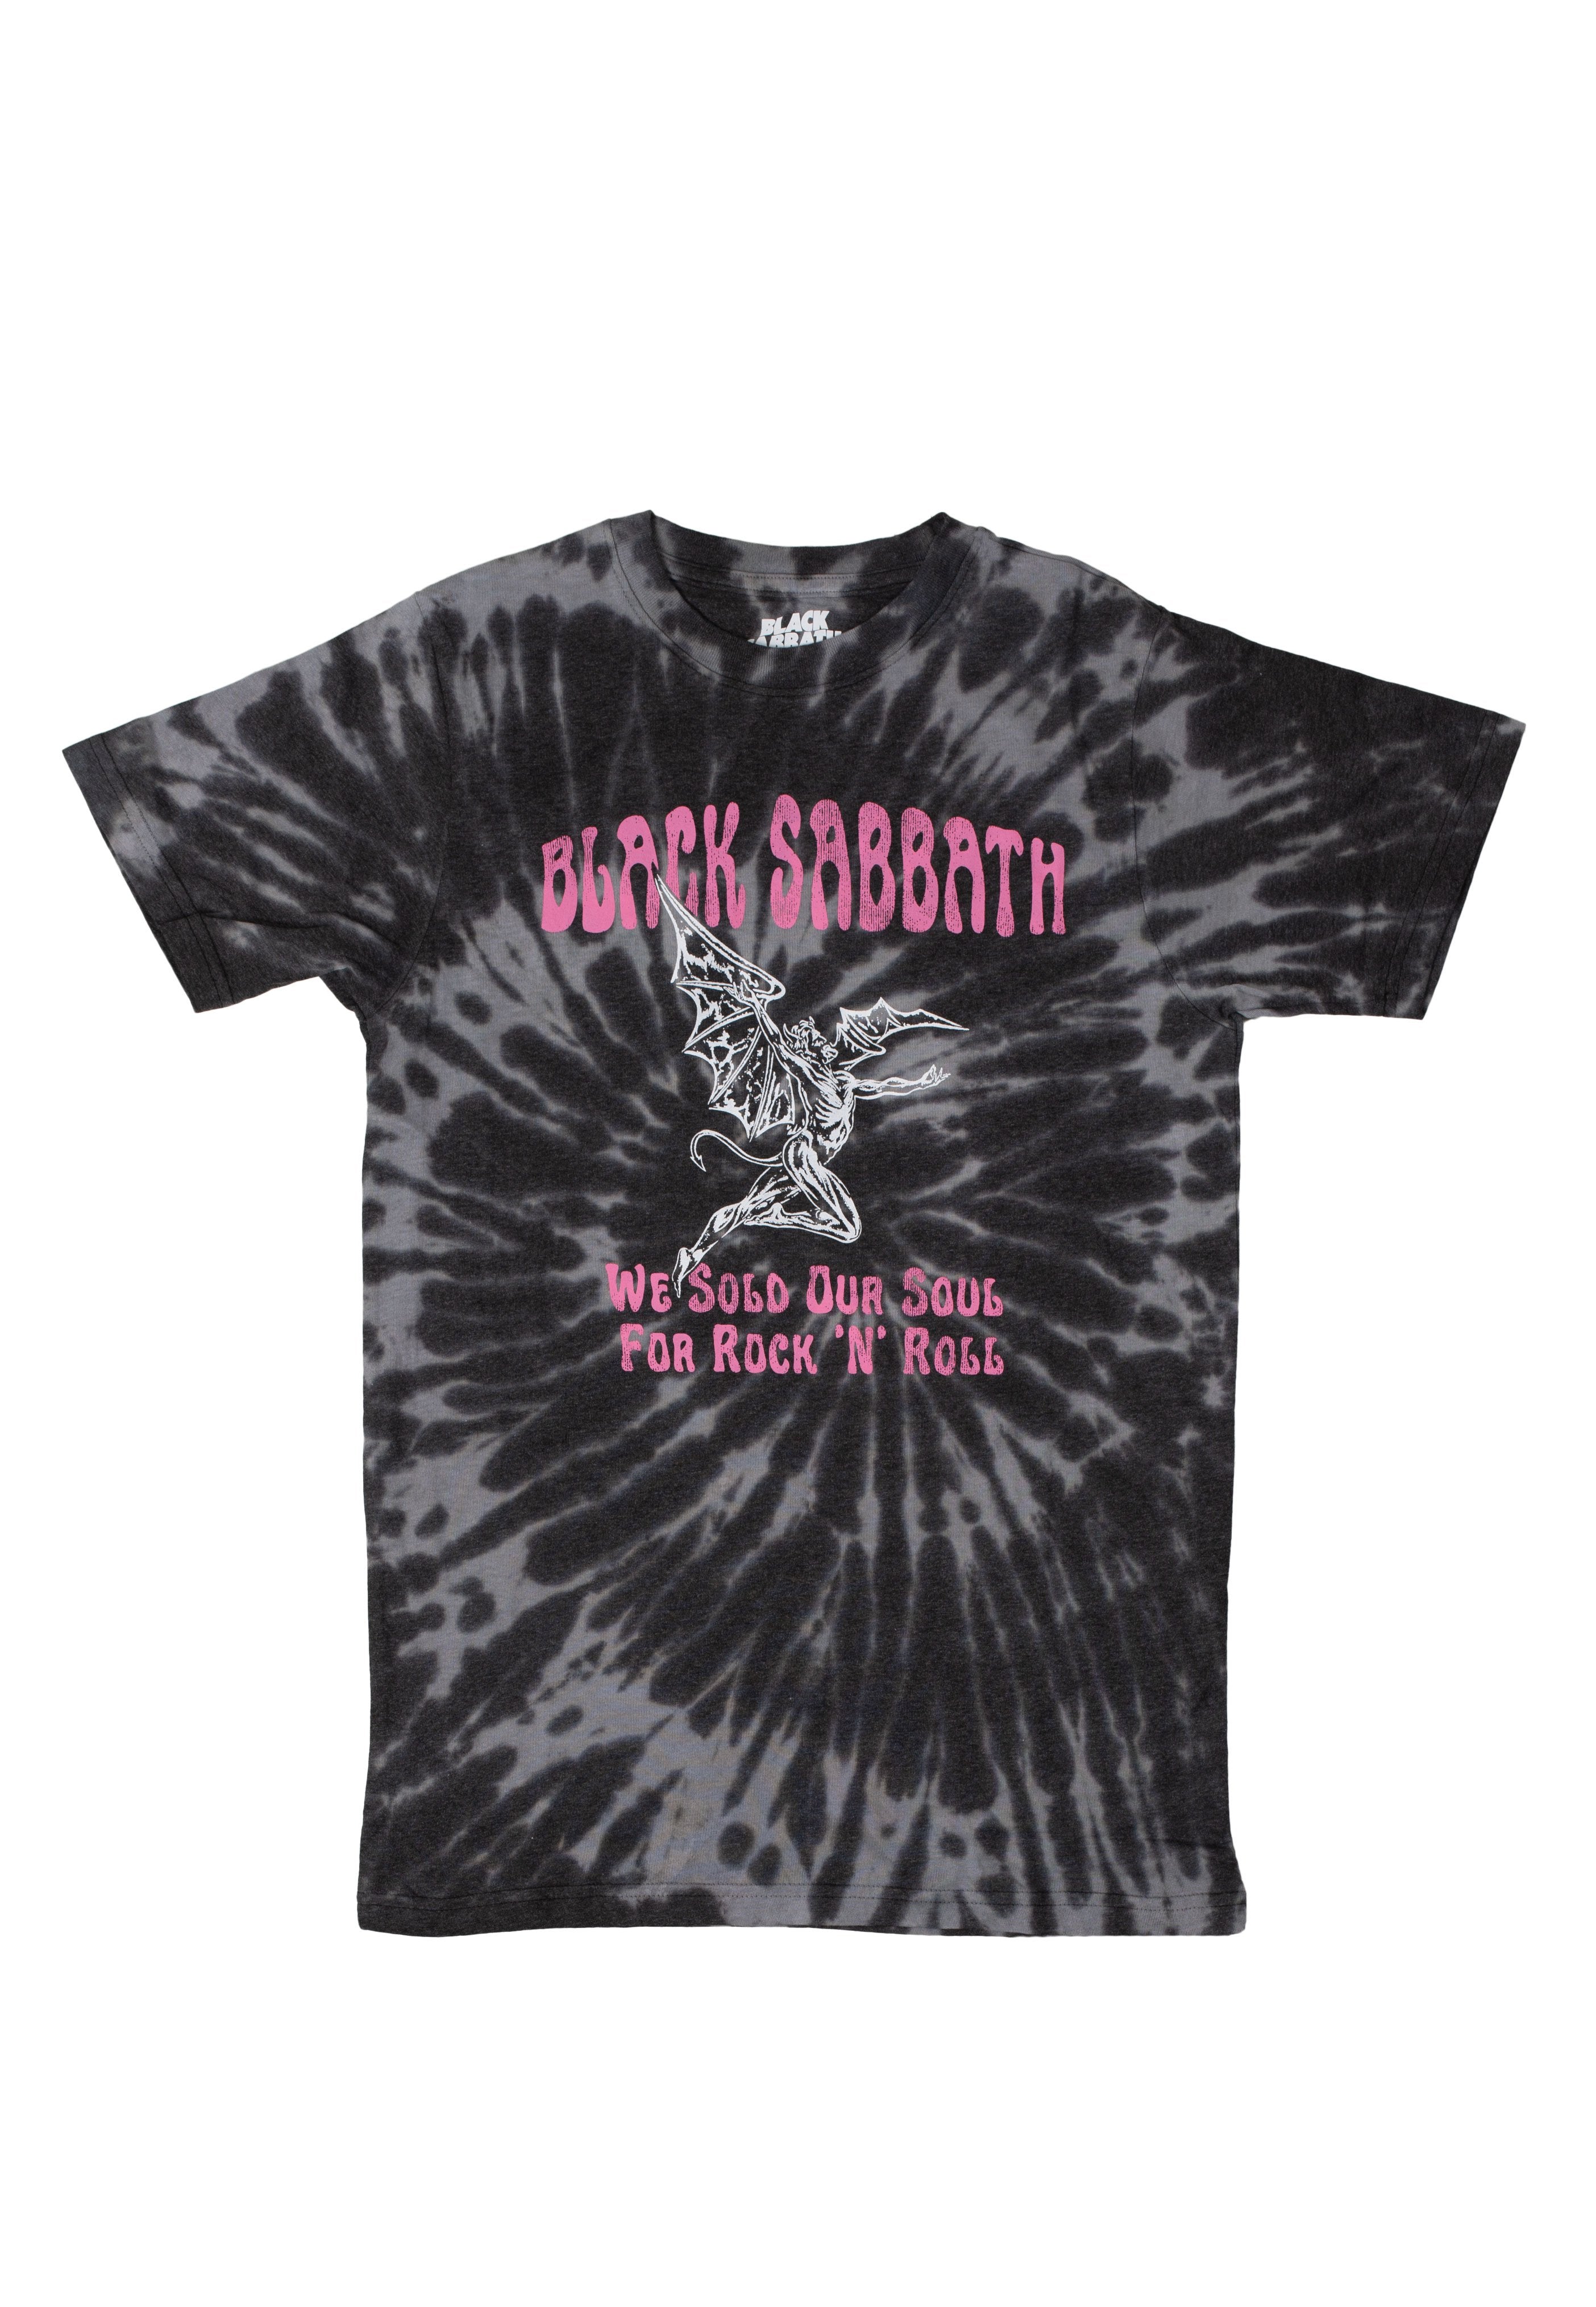 Black Sabbath - Sold Soul - T-Shirt